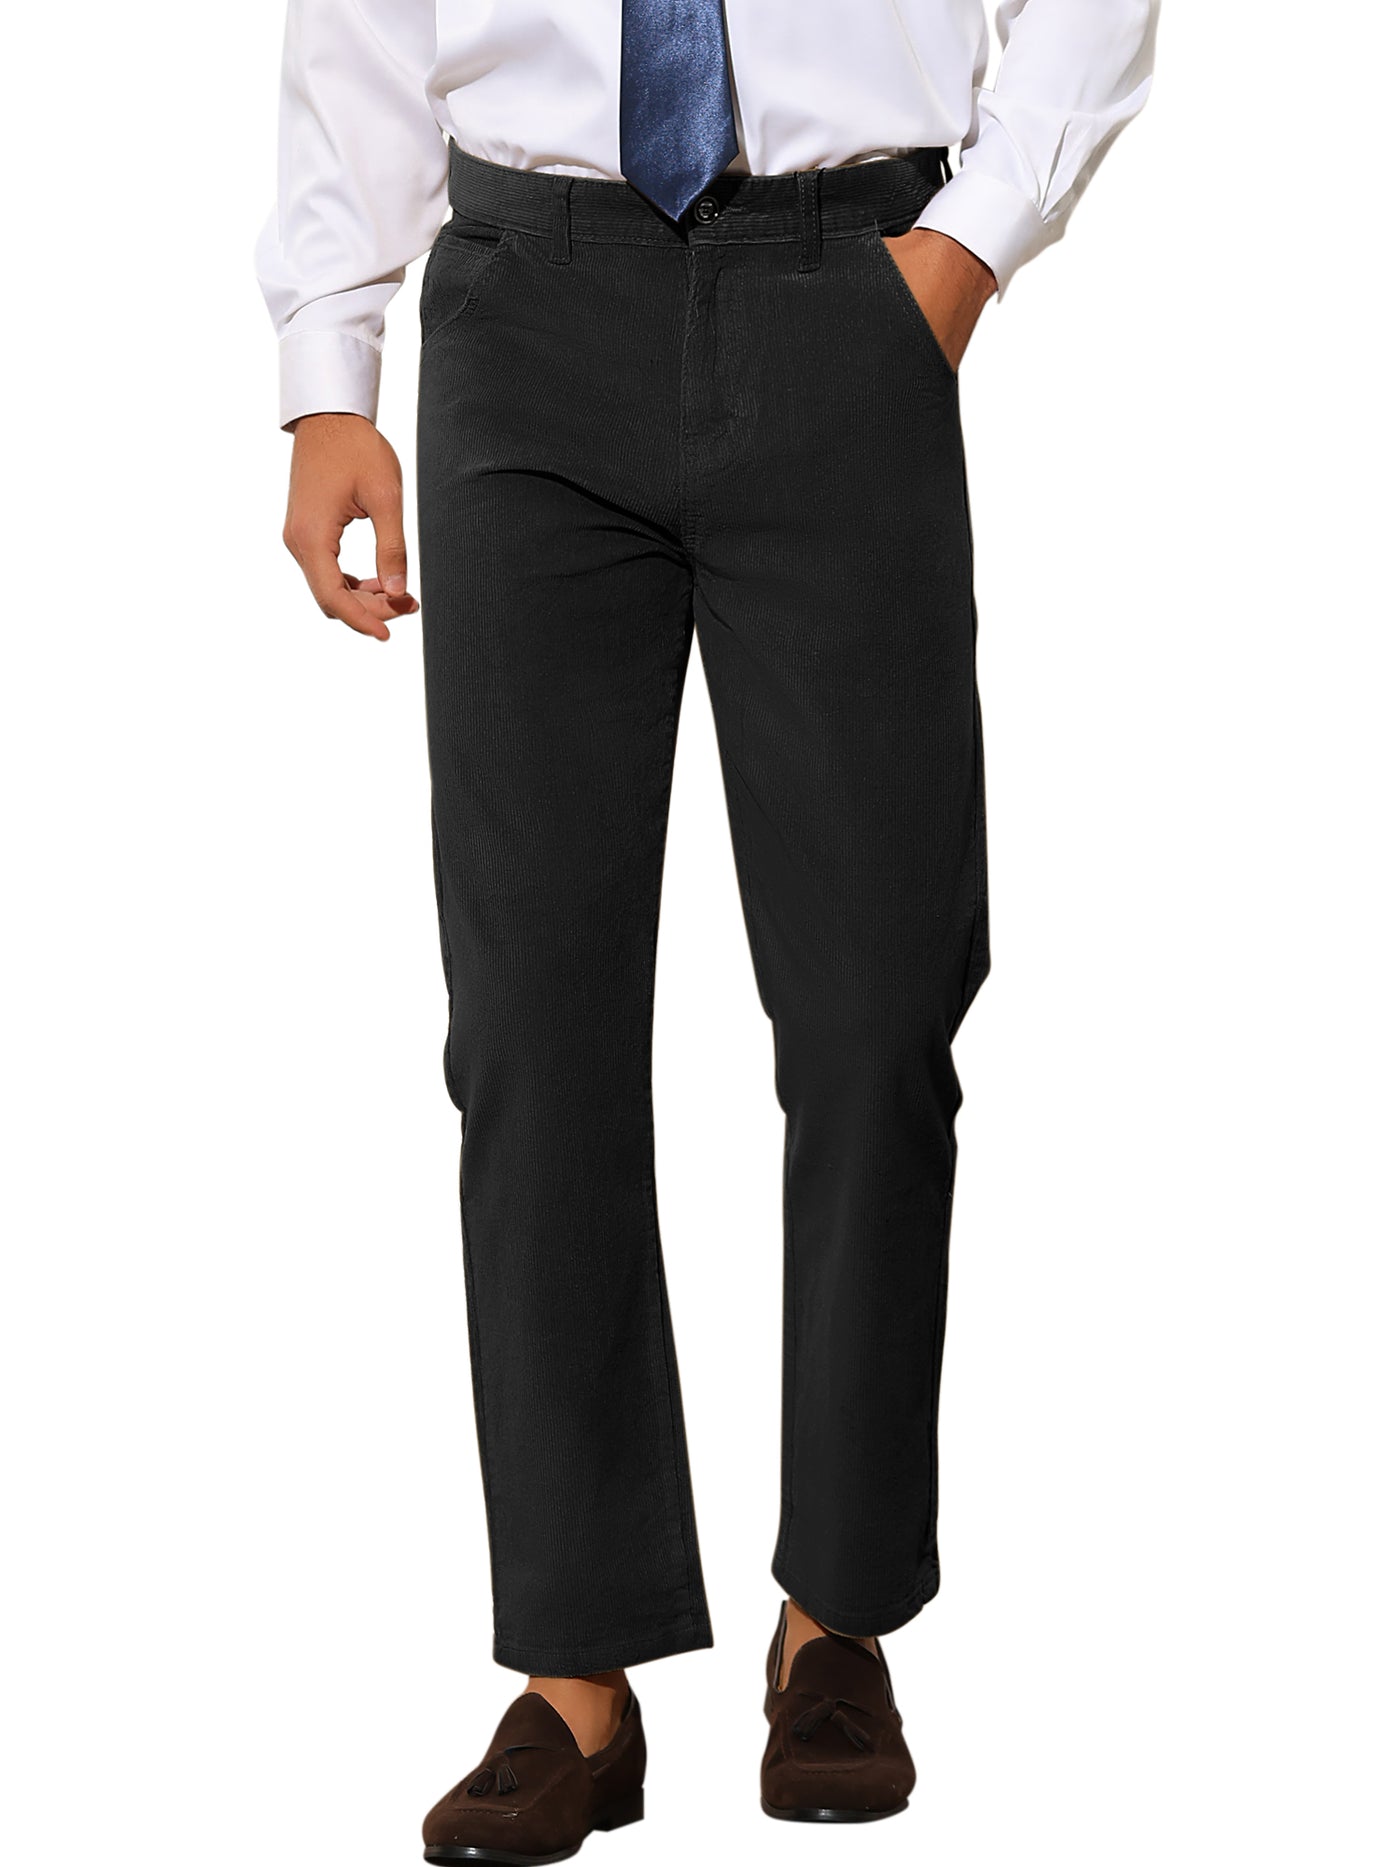 Bublédon Corduroy Dress Pants for Men's Straight Fit Flat Front Work Office Trousers